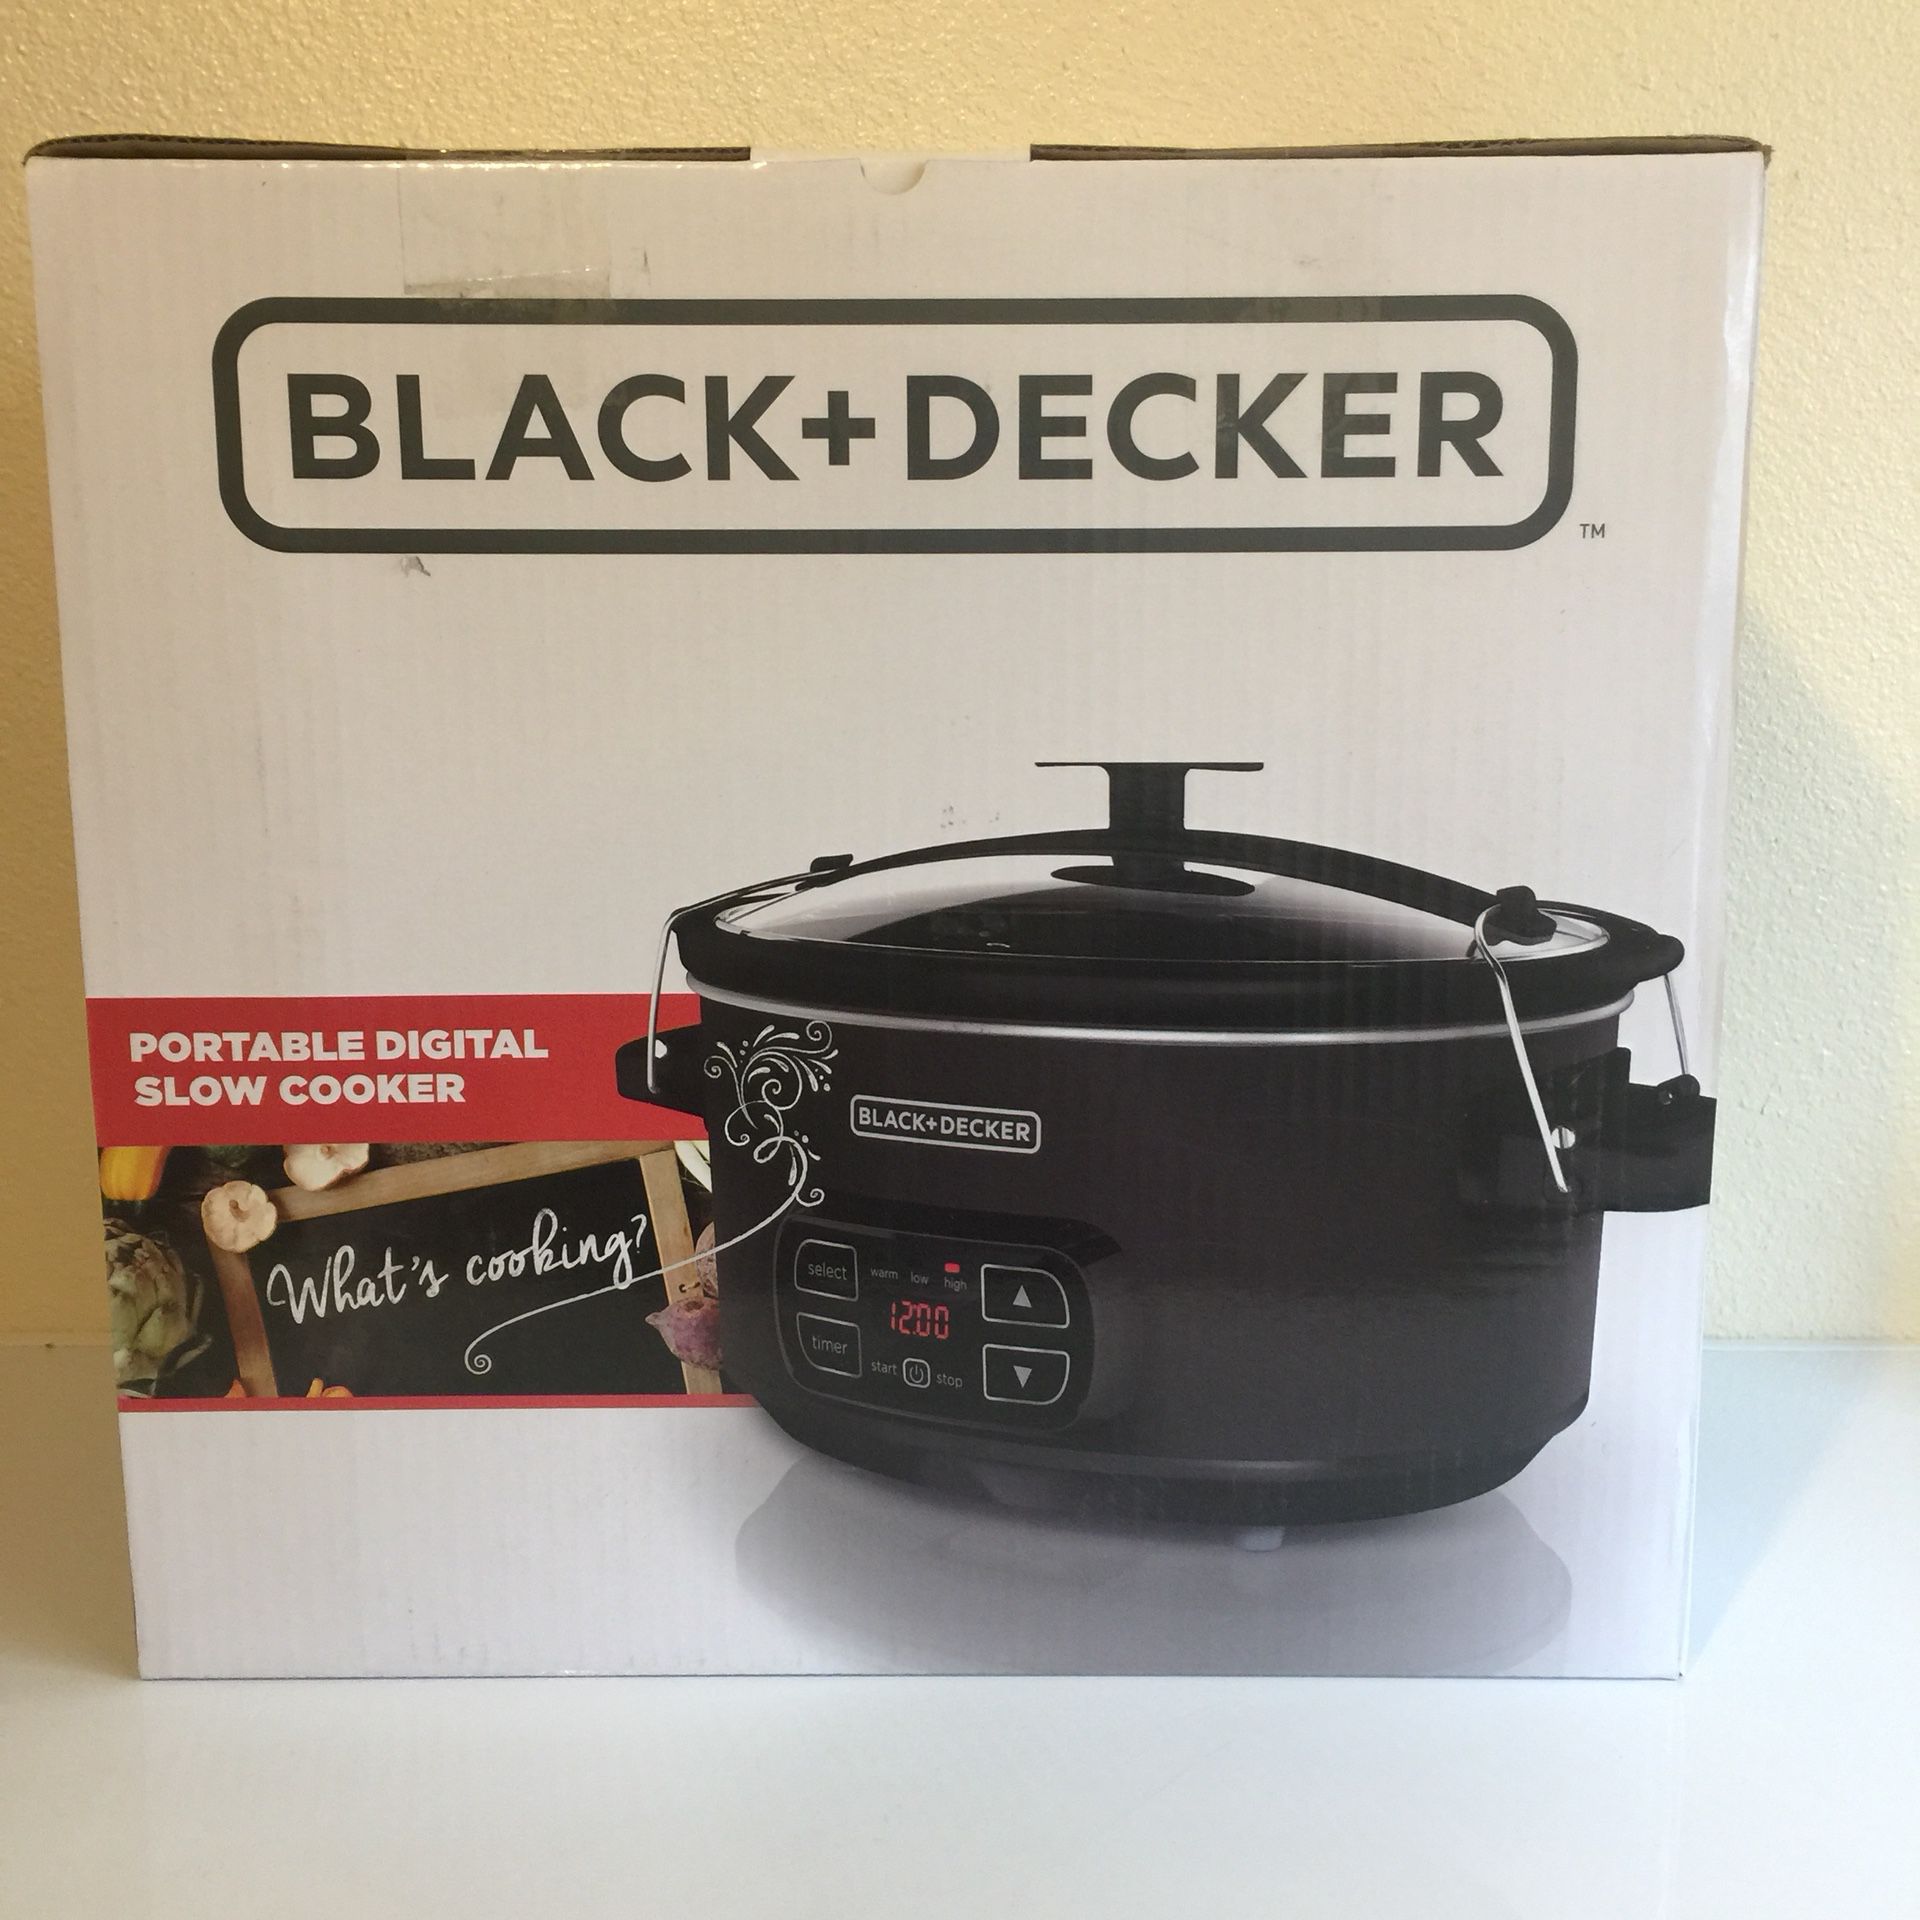 BLACK+DECKER 4-Quart Slow Cooker with Chalkboard Surface, Slate